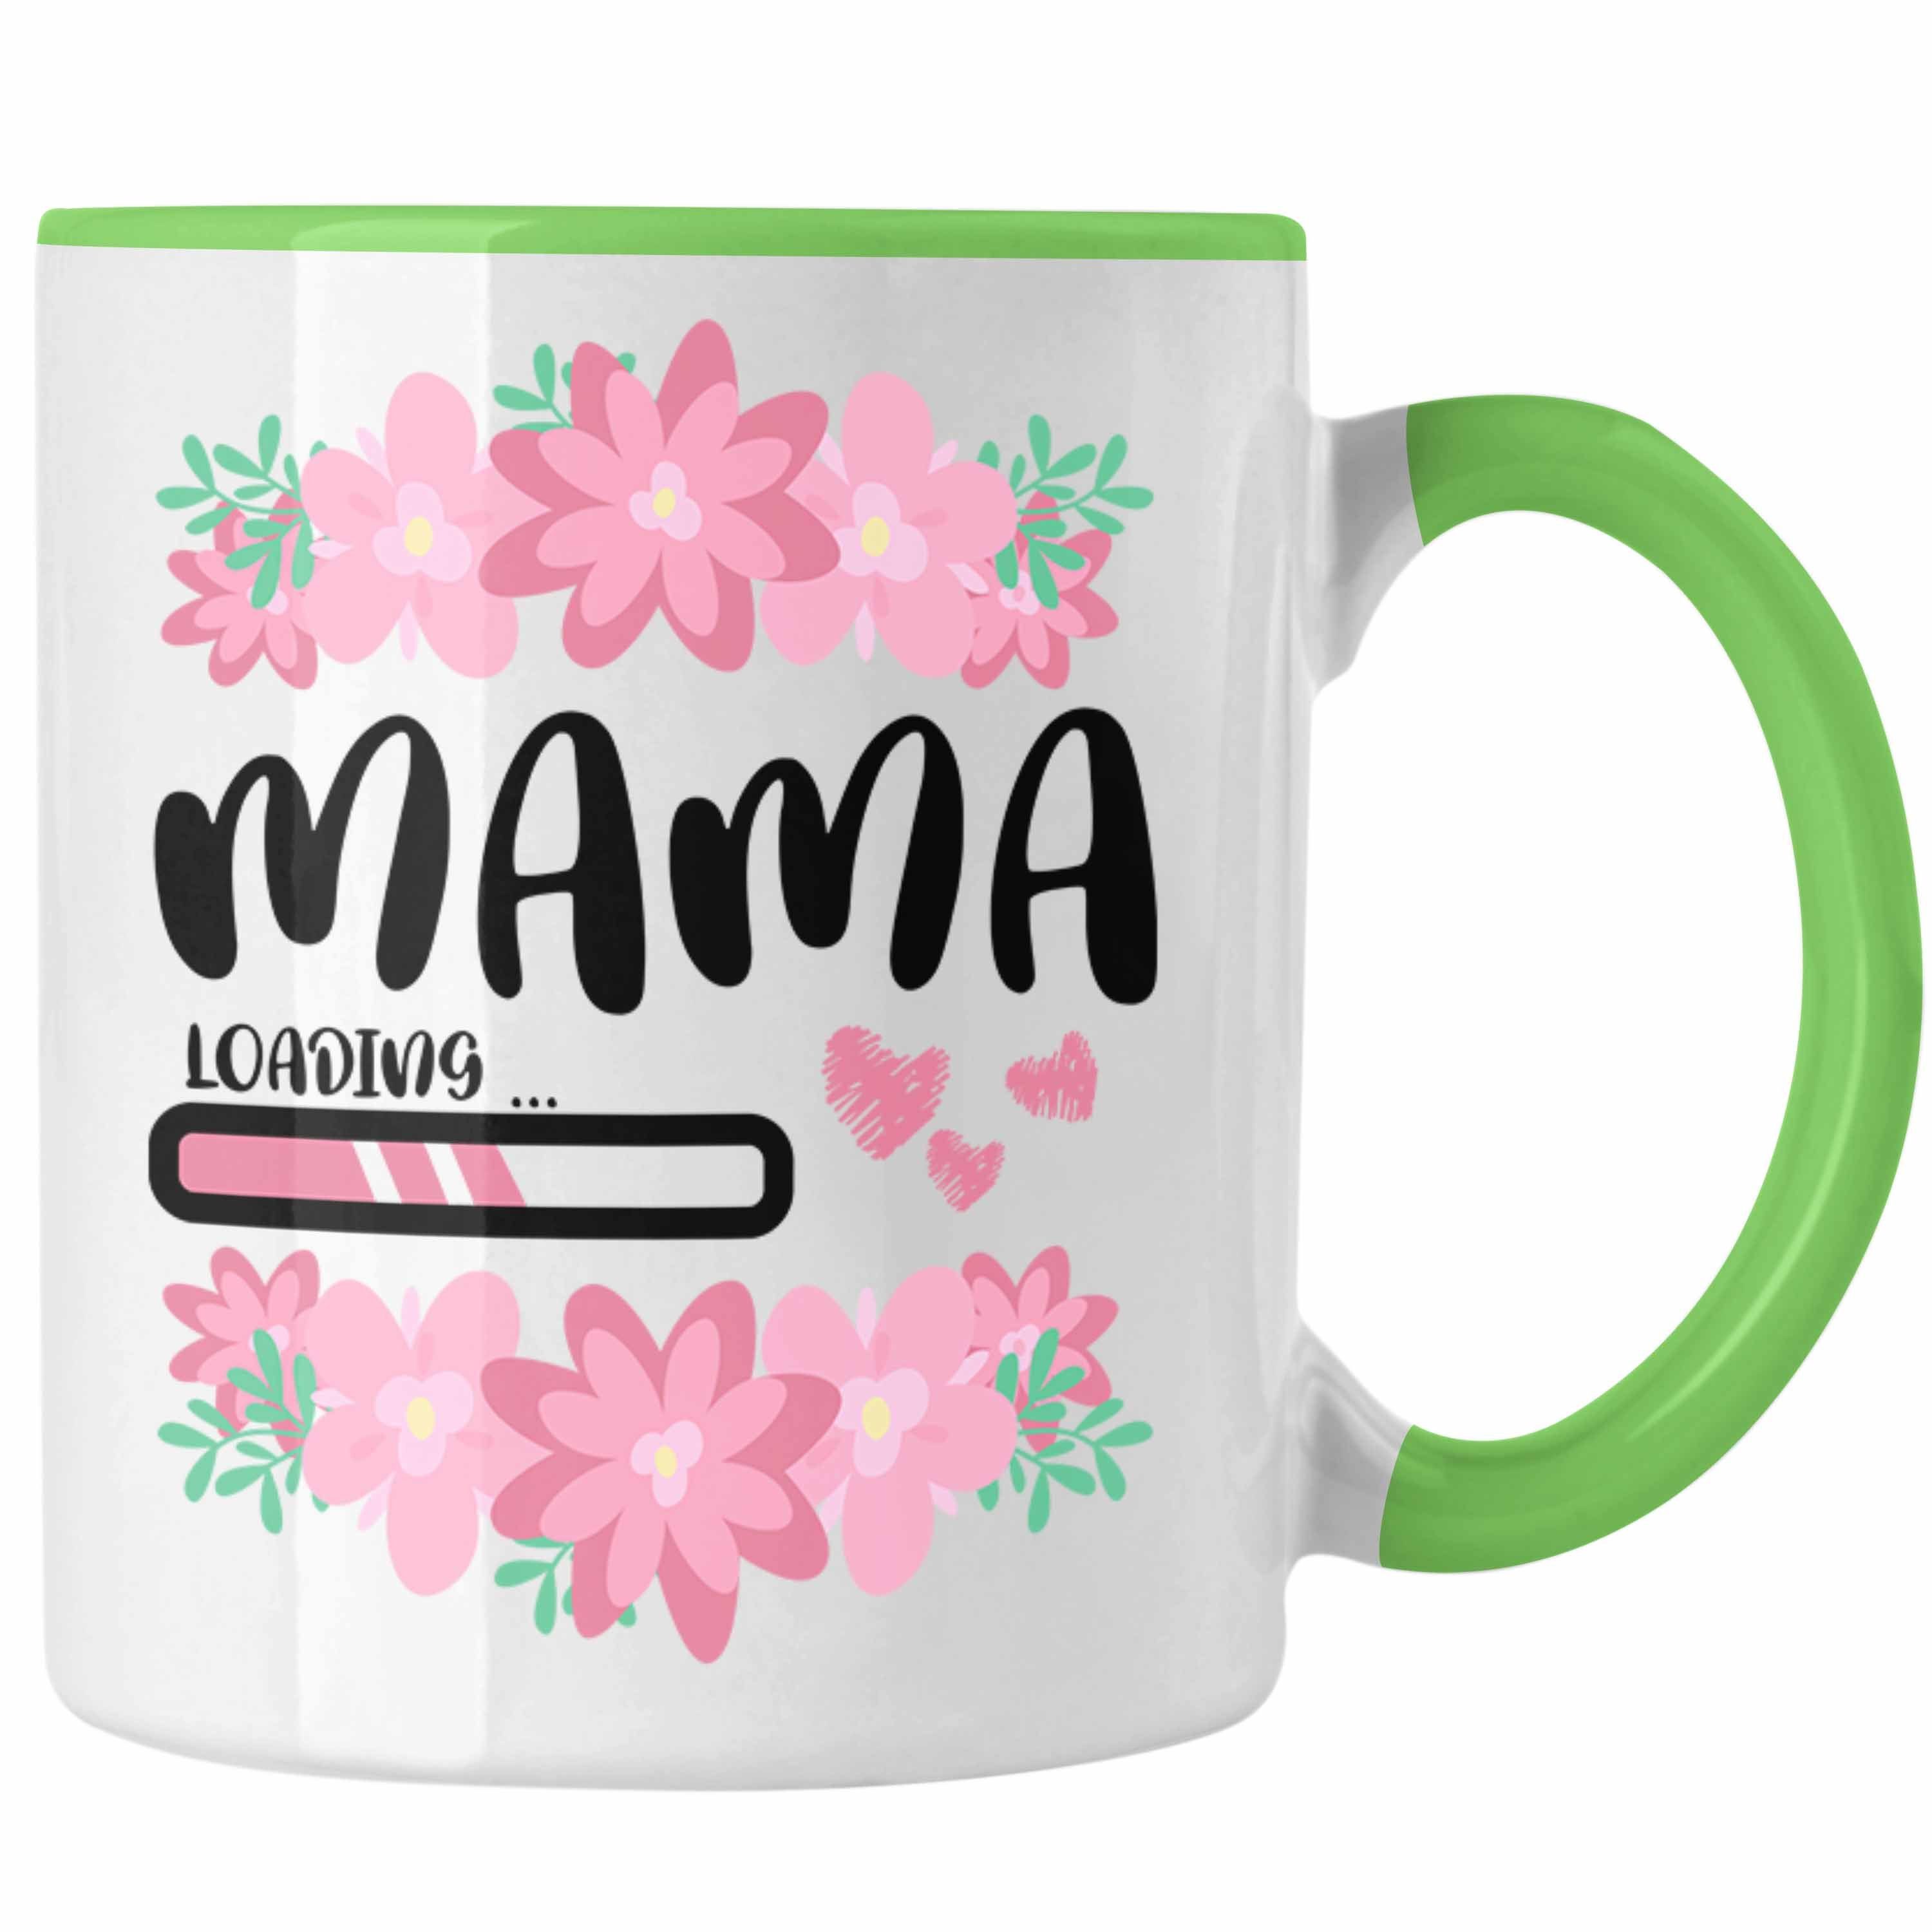 Trendation Tasse Trendation - Mama Loading Tasse Rosa Geschenk Schwangerschaft Baby Kaffeetasse Schwangerschaftsankündigung Grün